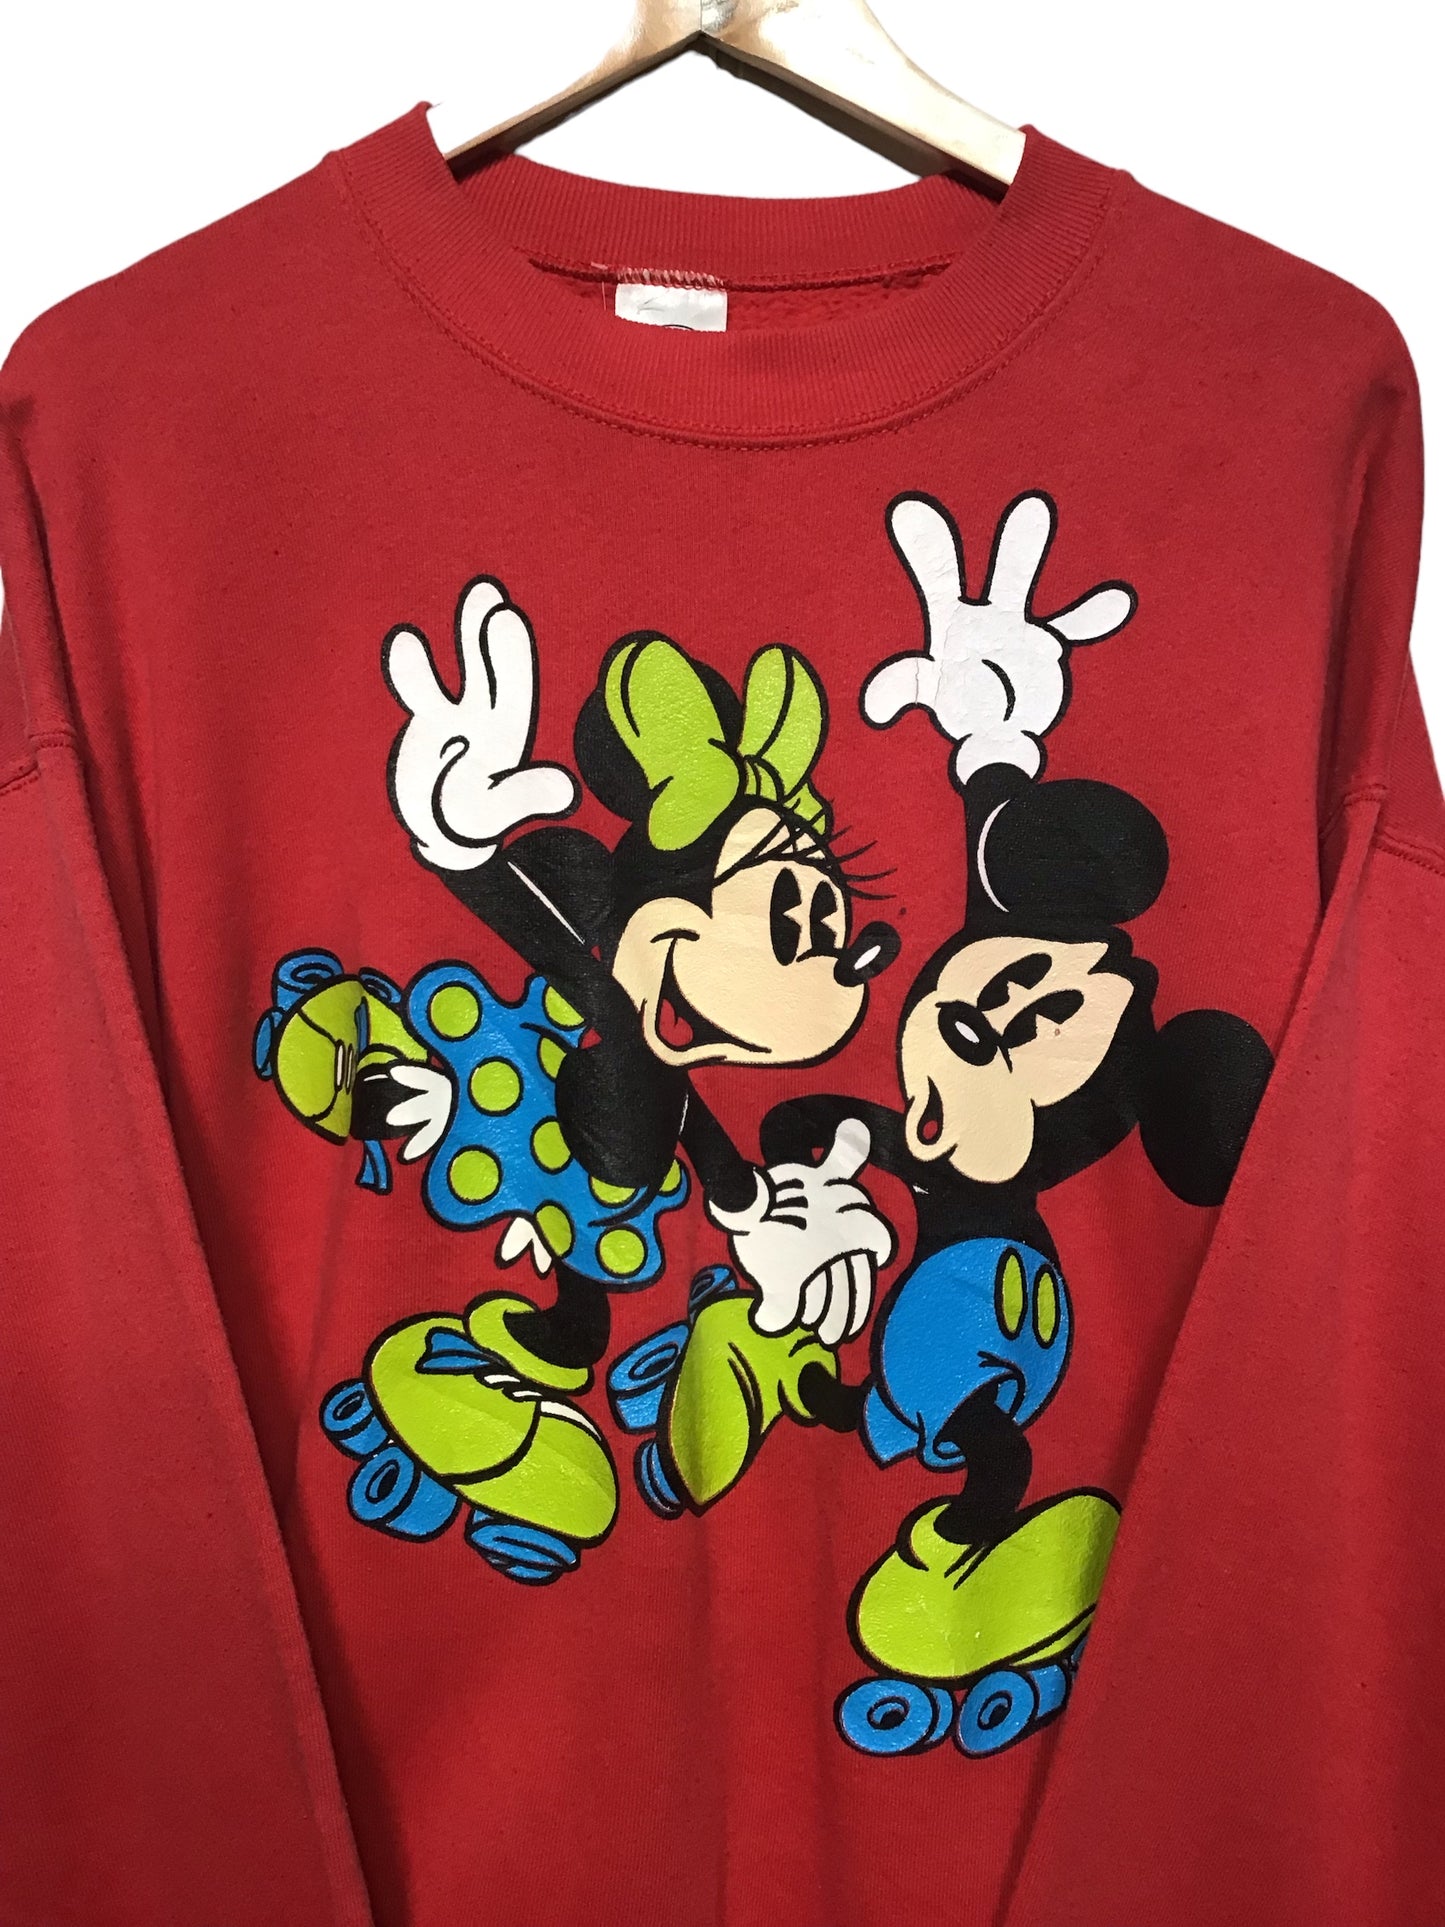 Mickey and Minnie Mouse Disney Sweatshirt (Size L)